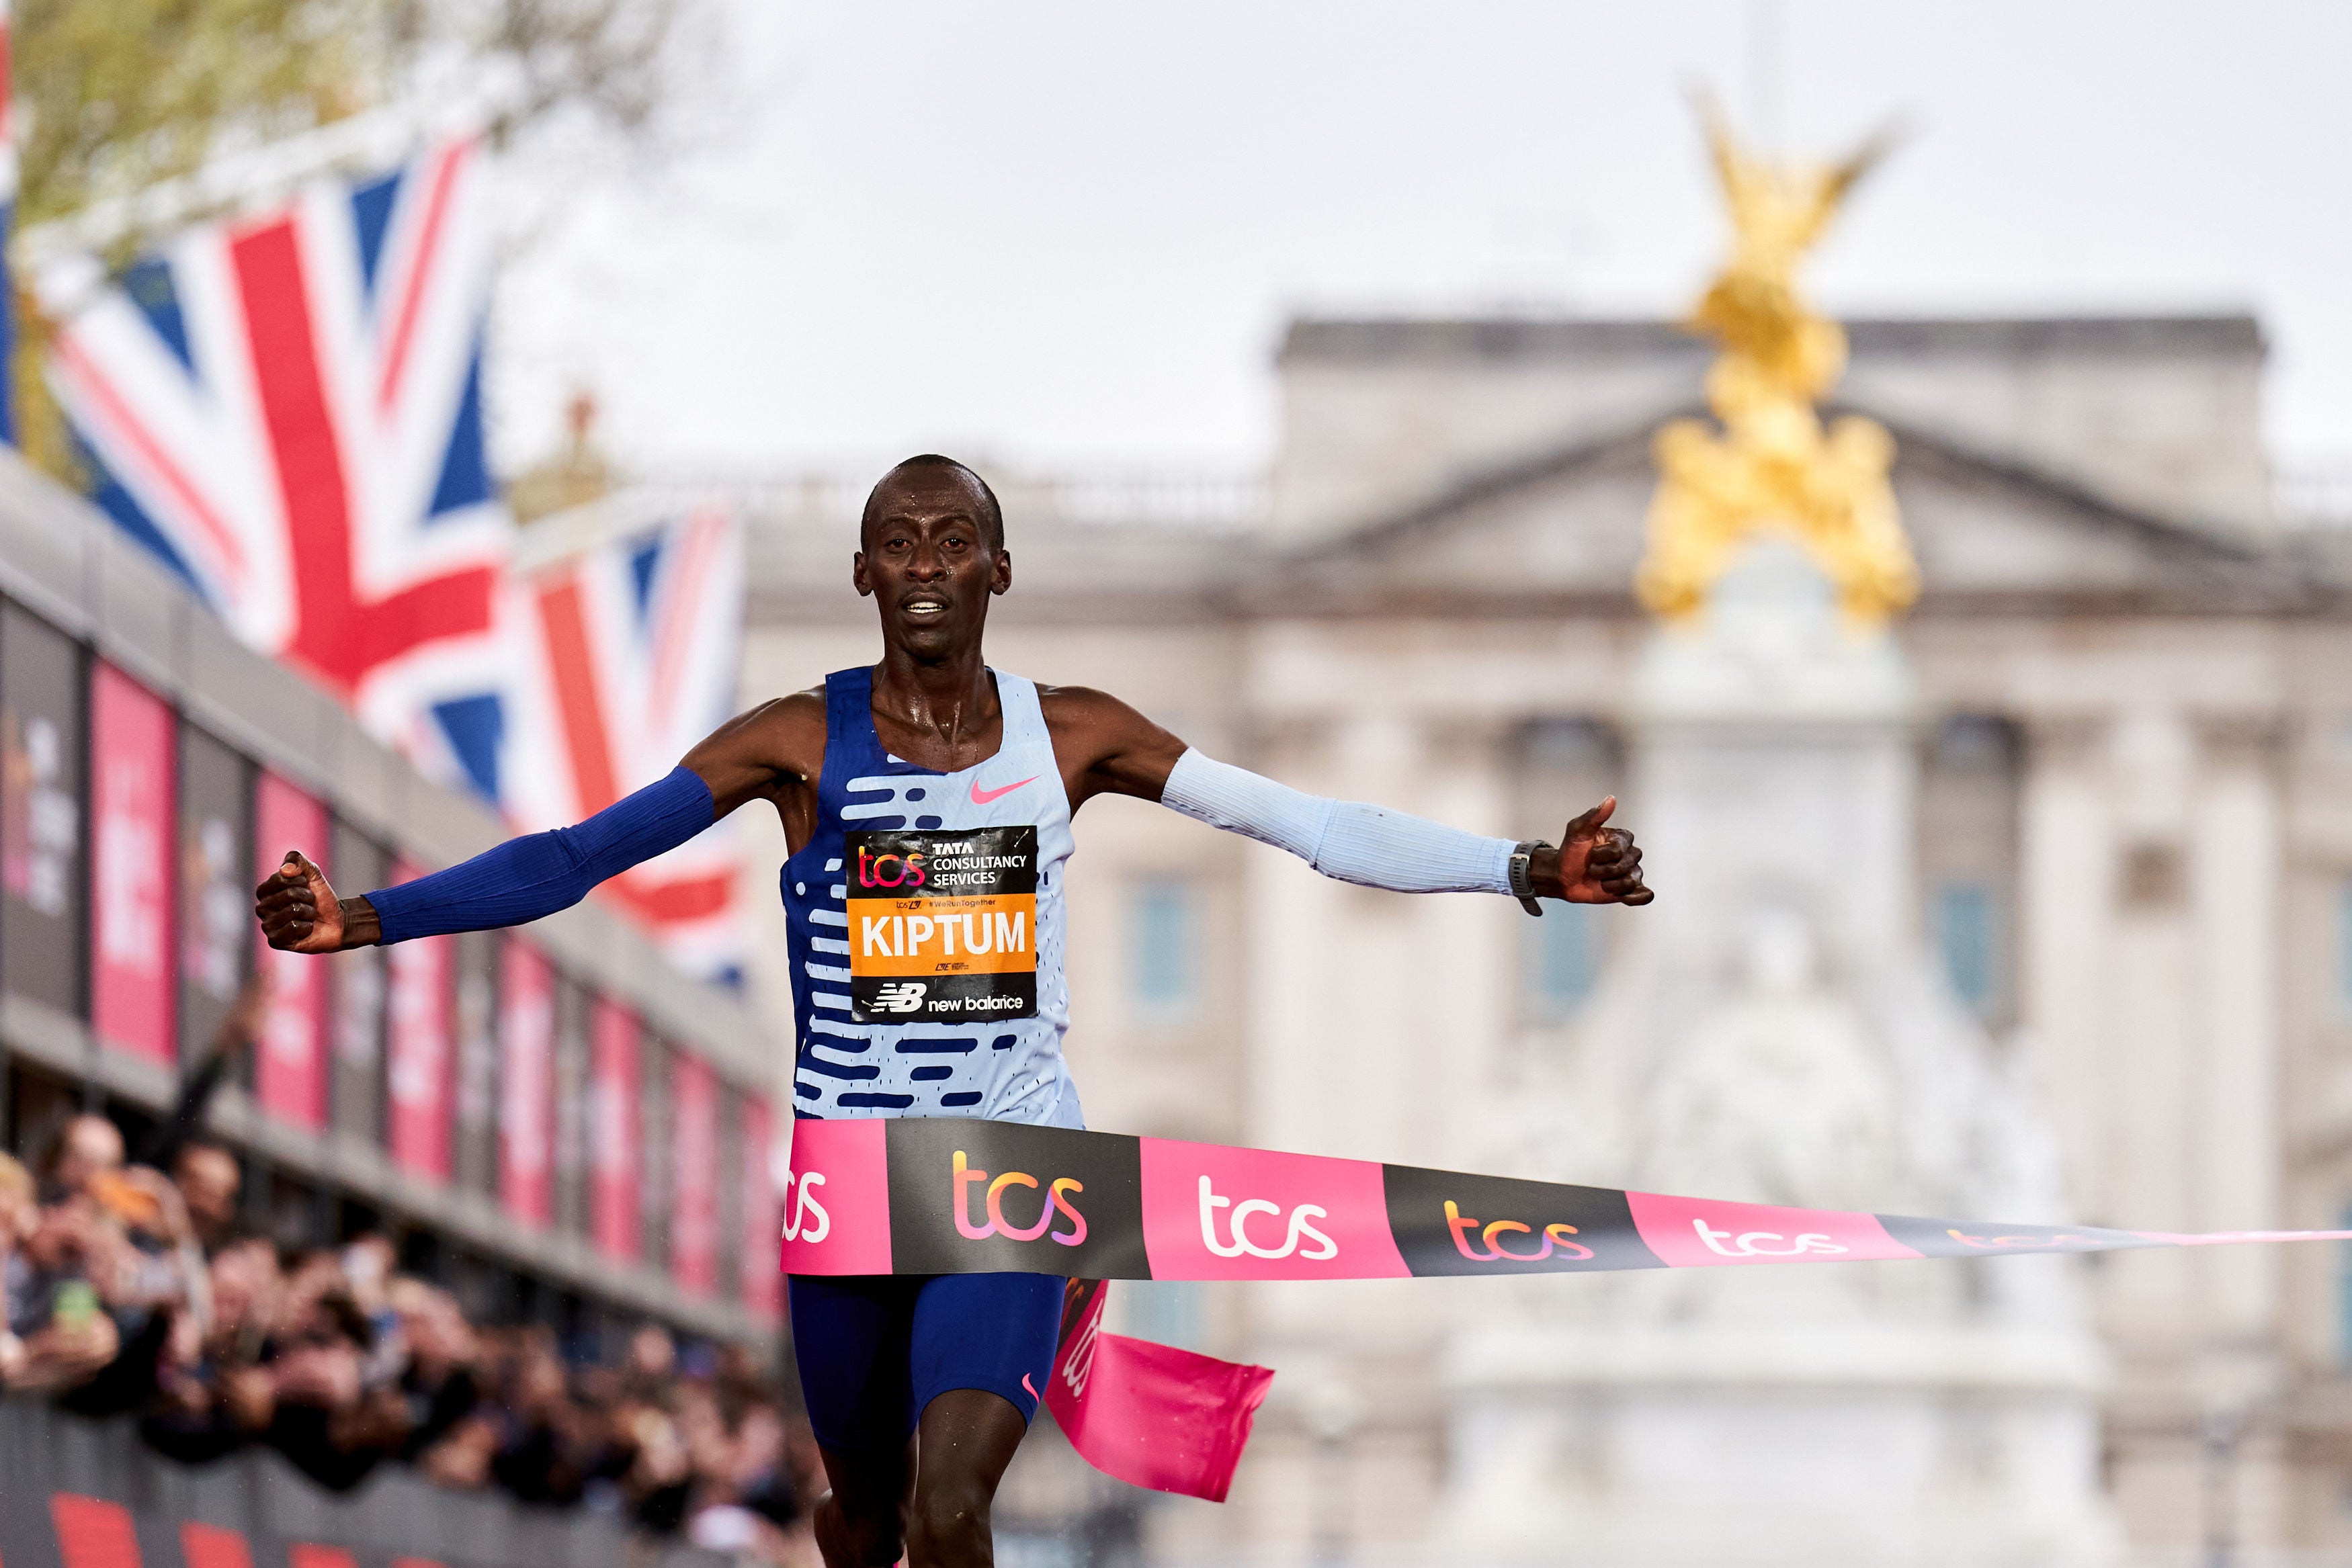 Kelvin Kiptum won the London Marathon last year